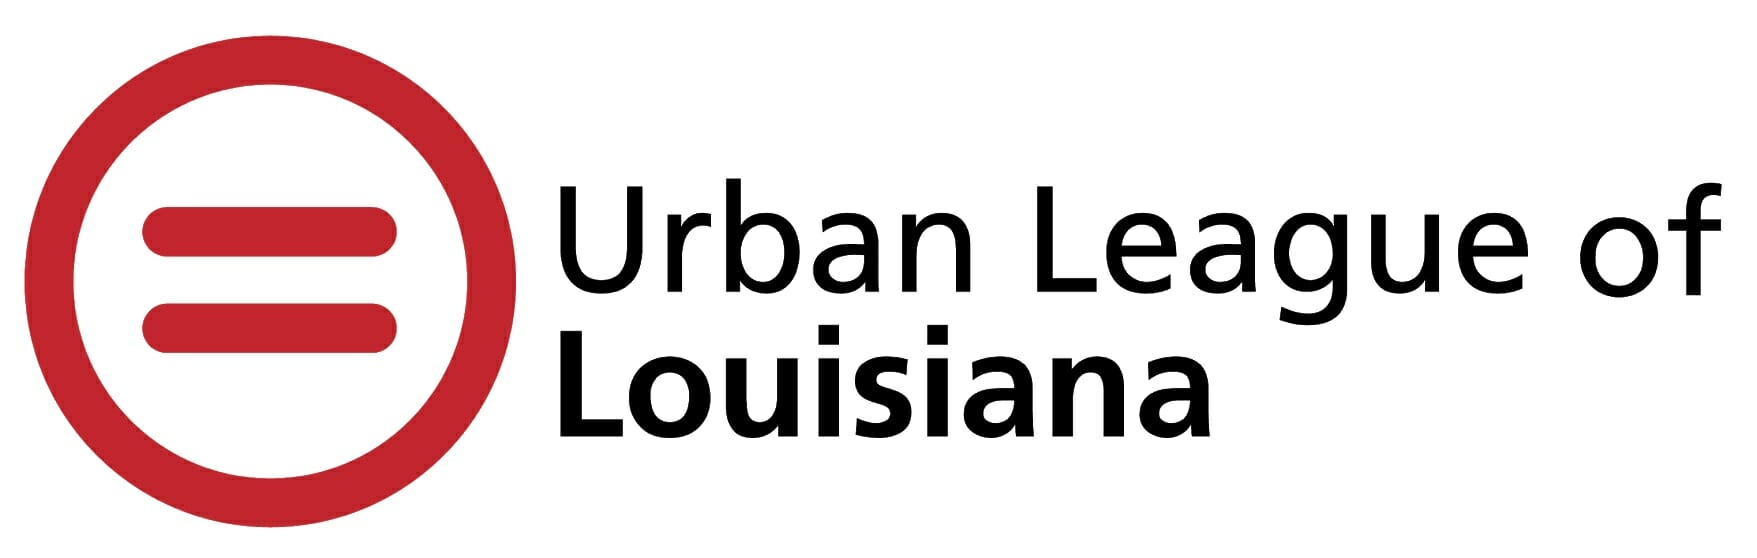 urban league of louisiana logo